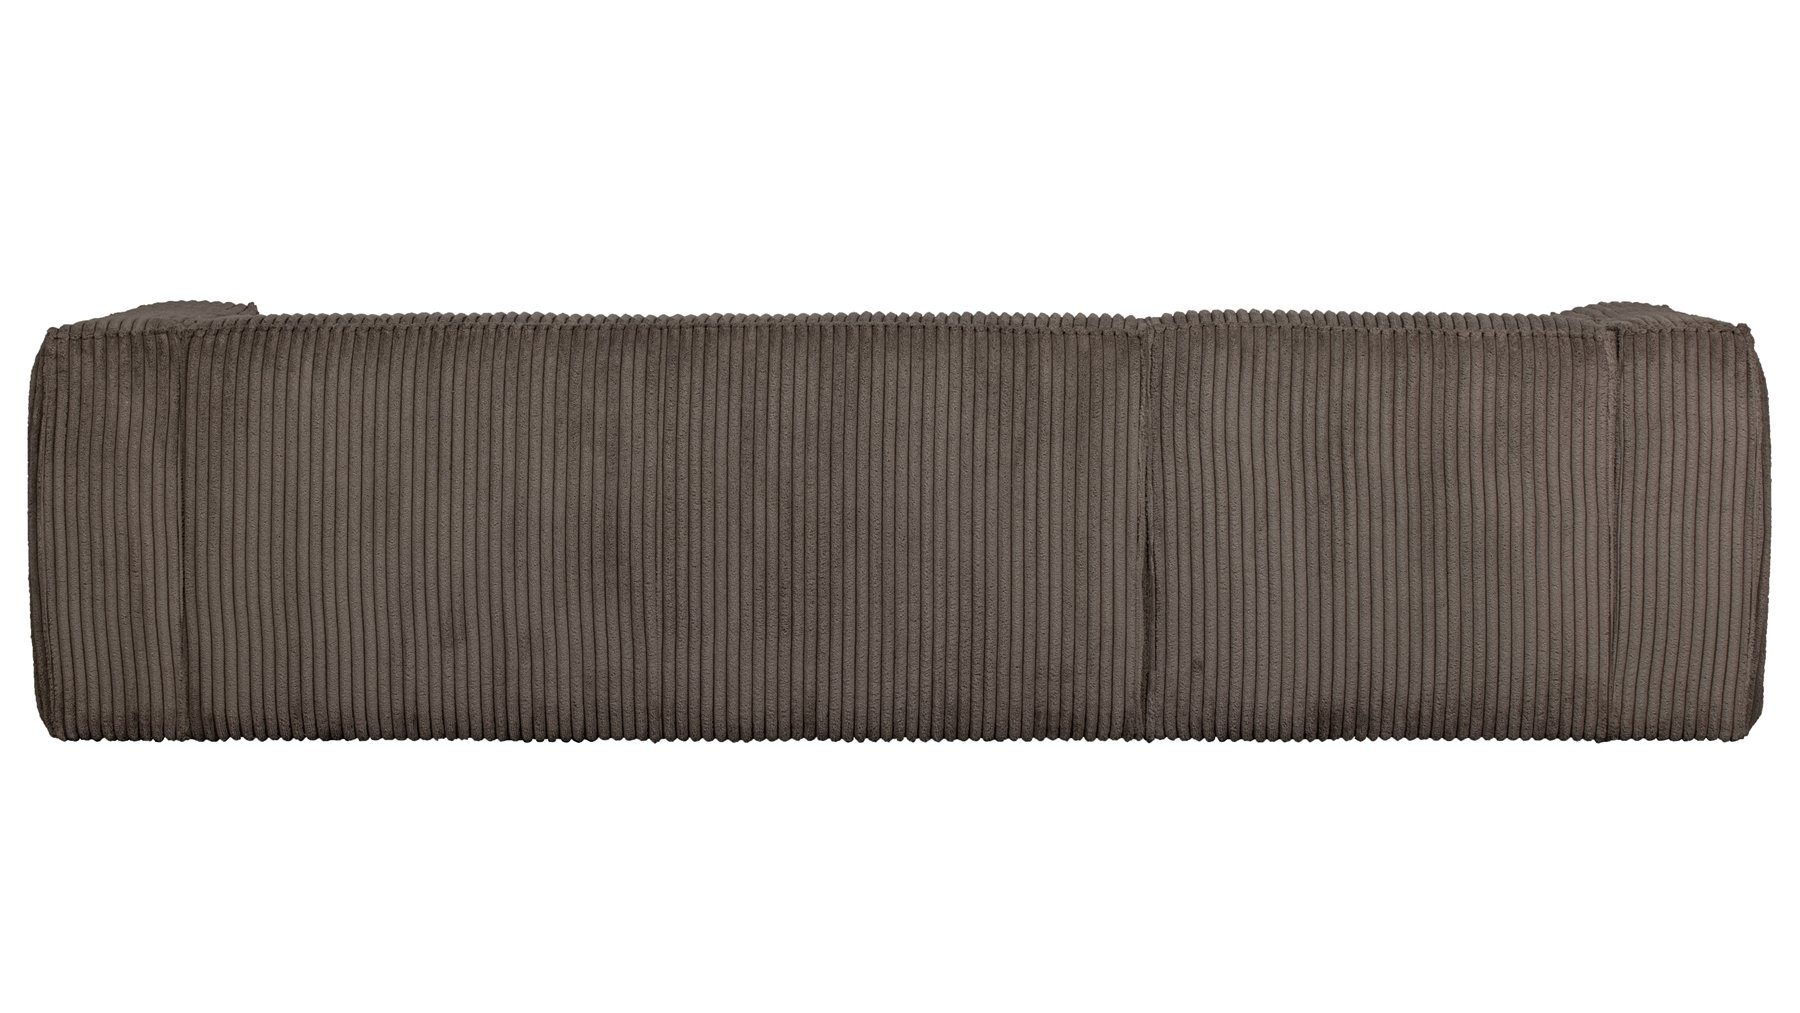 Ribcord Links - freistellbar Mud, WOOOD Ecksofa Bean Longchair-Sofa